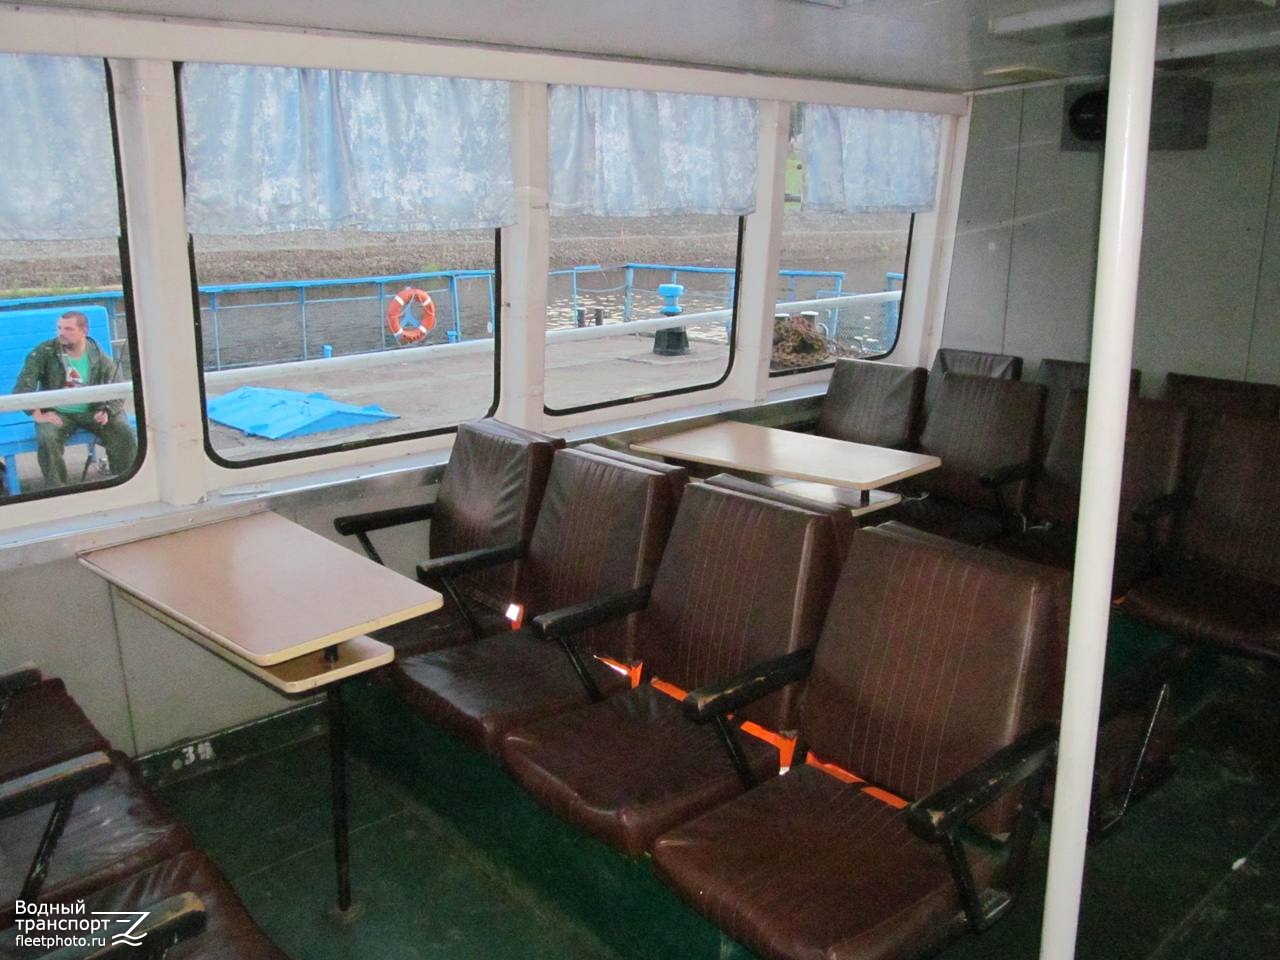 Московский-7. Internal compartments